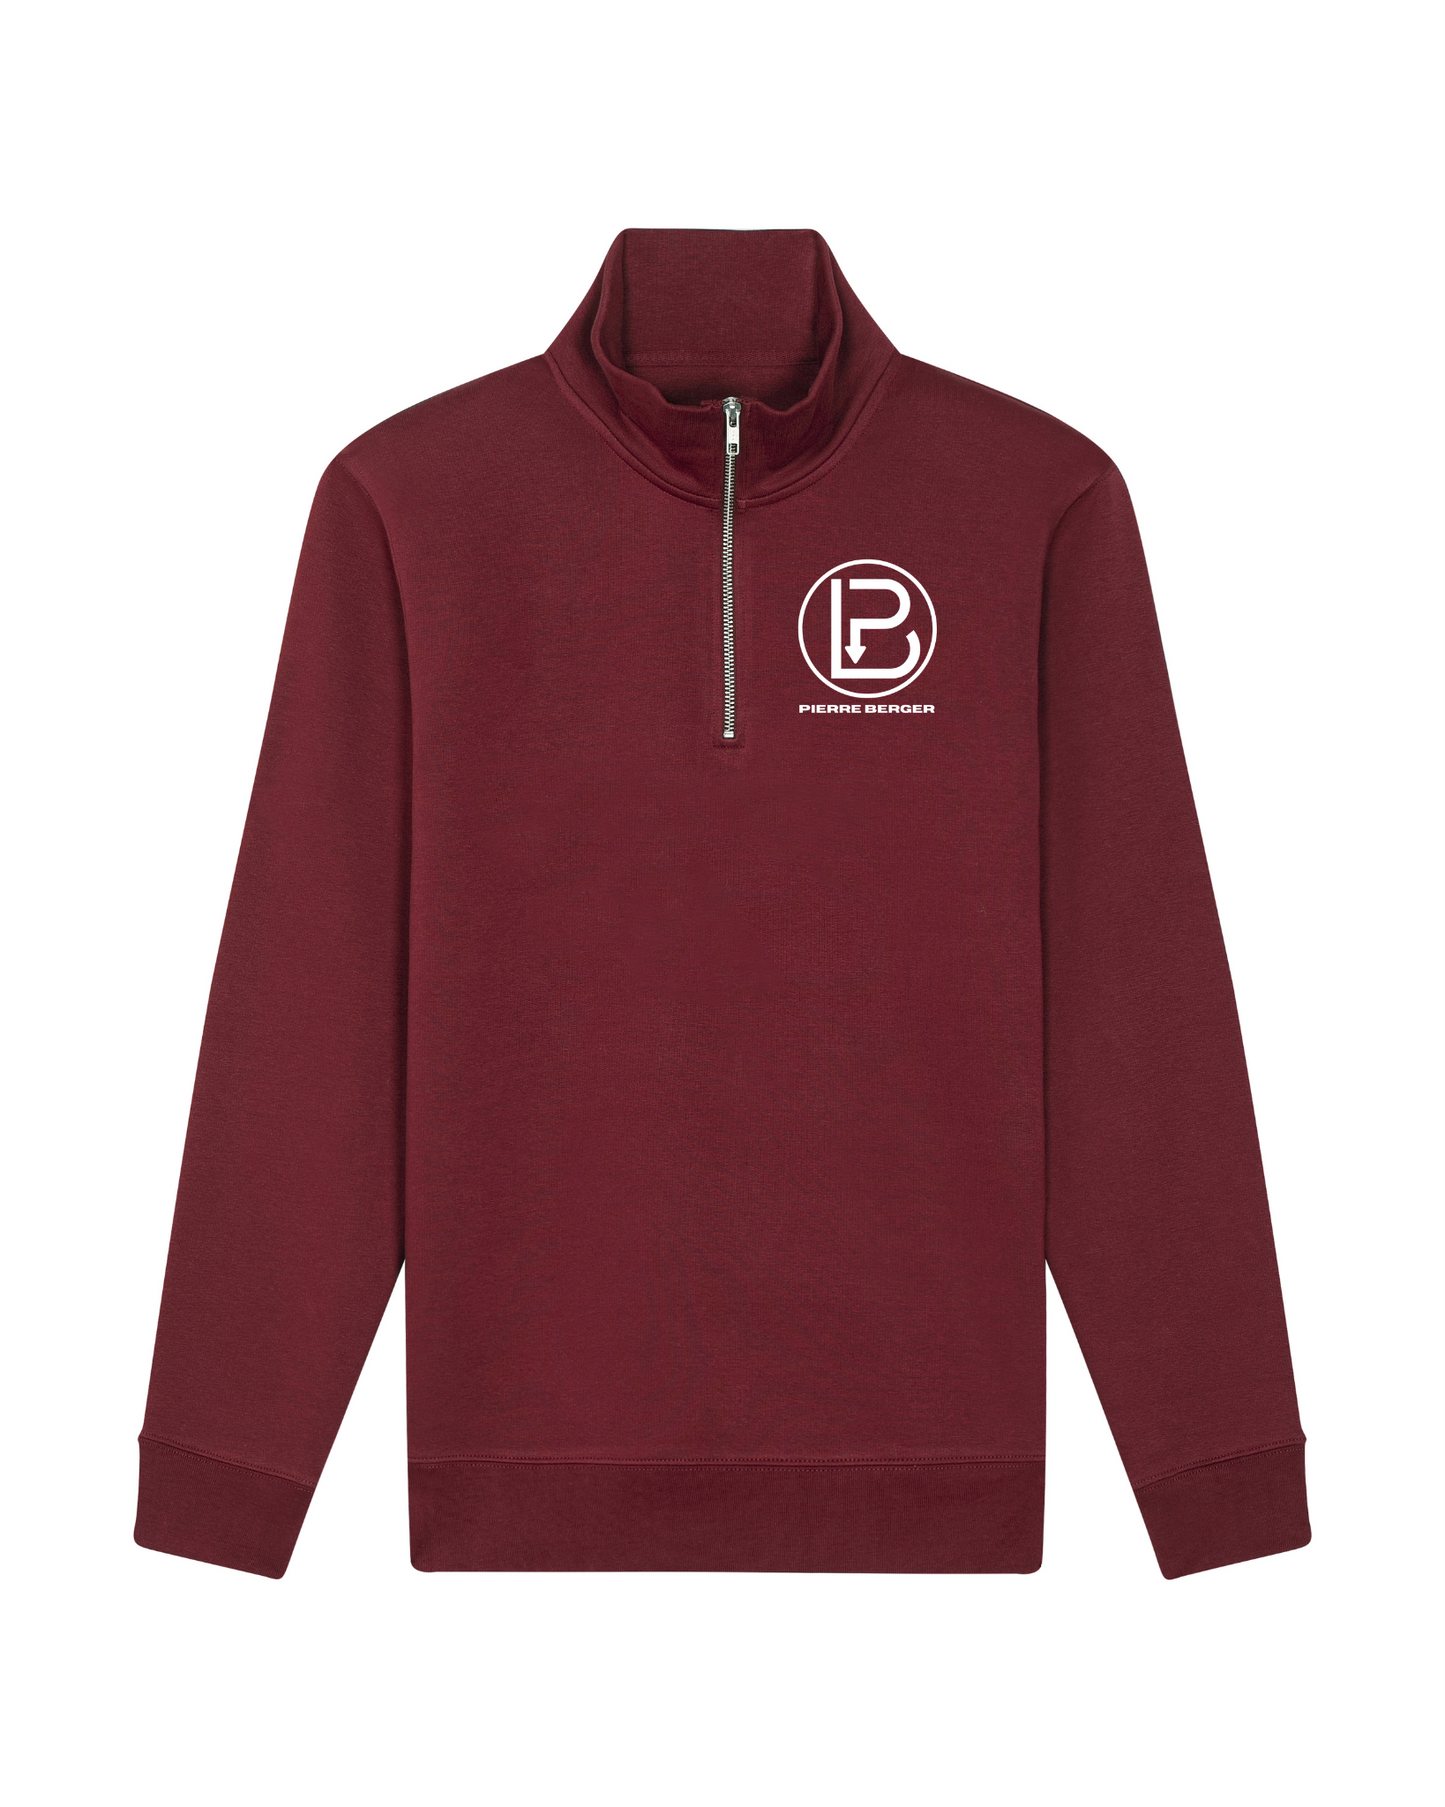 PIERRE BERGER - Men's sweatshirt with zip 100% recycled embroidery